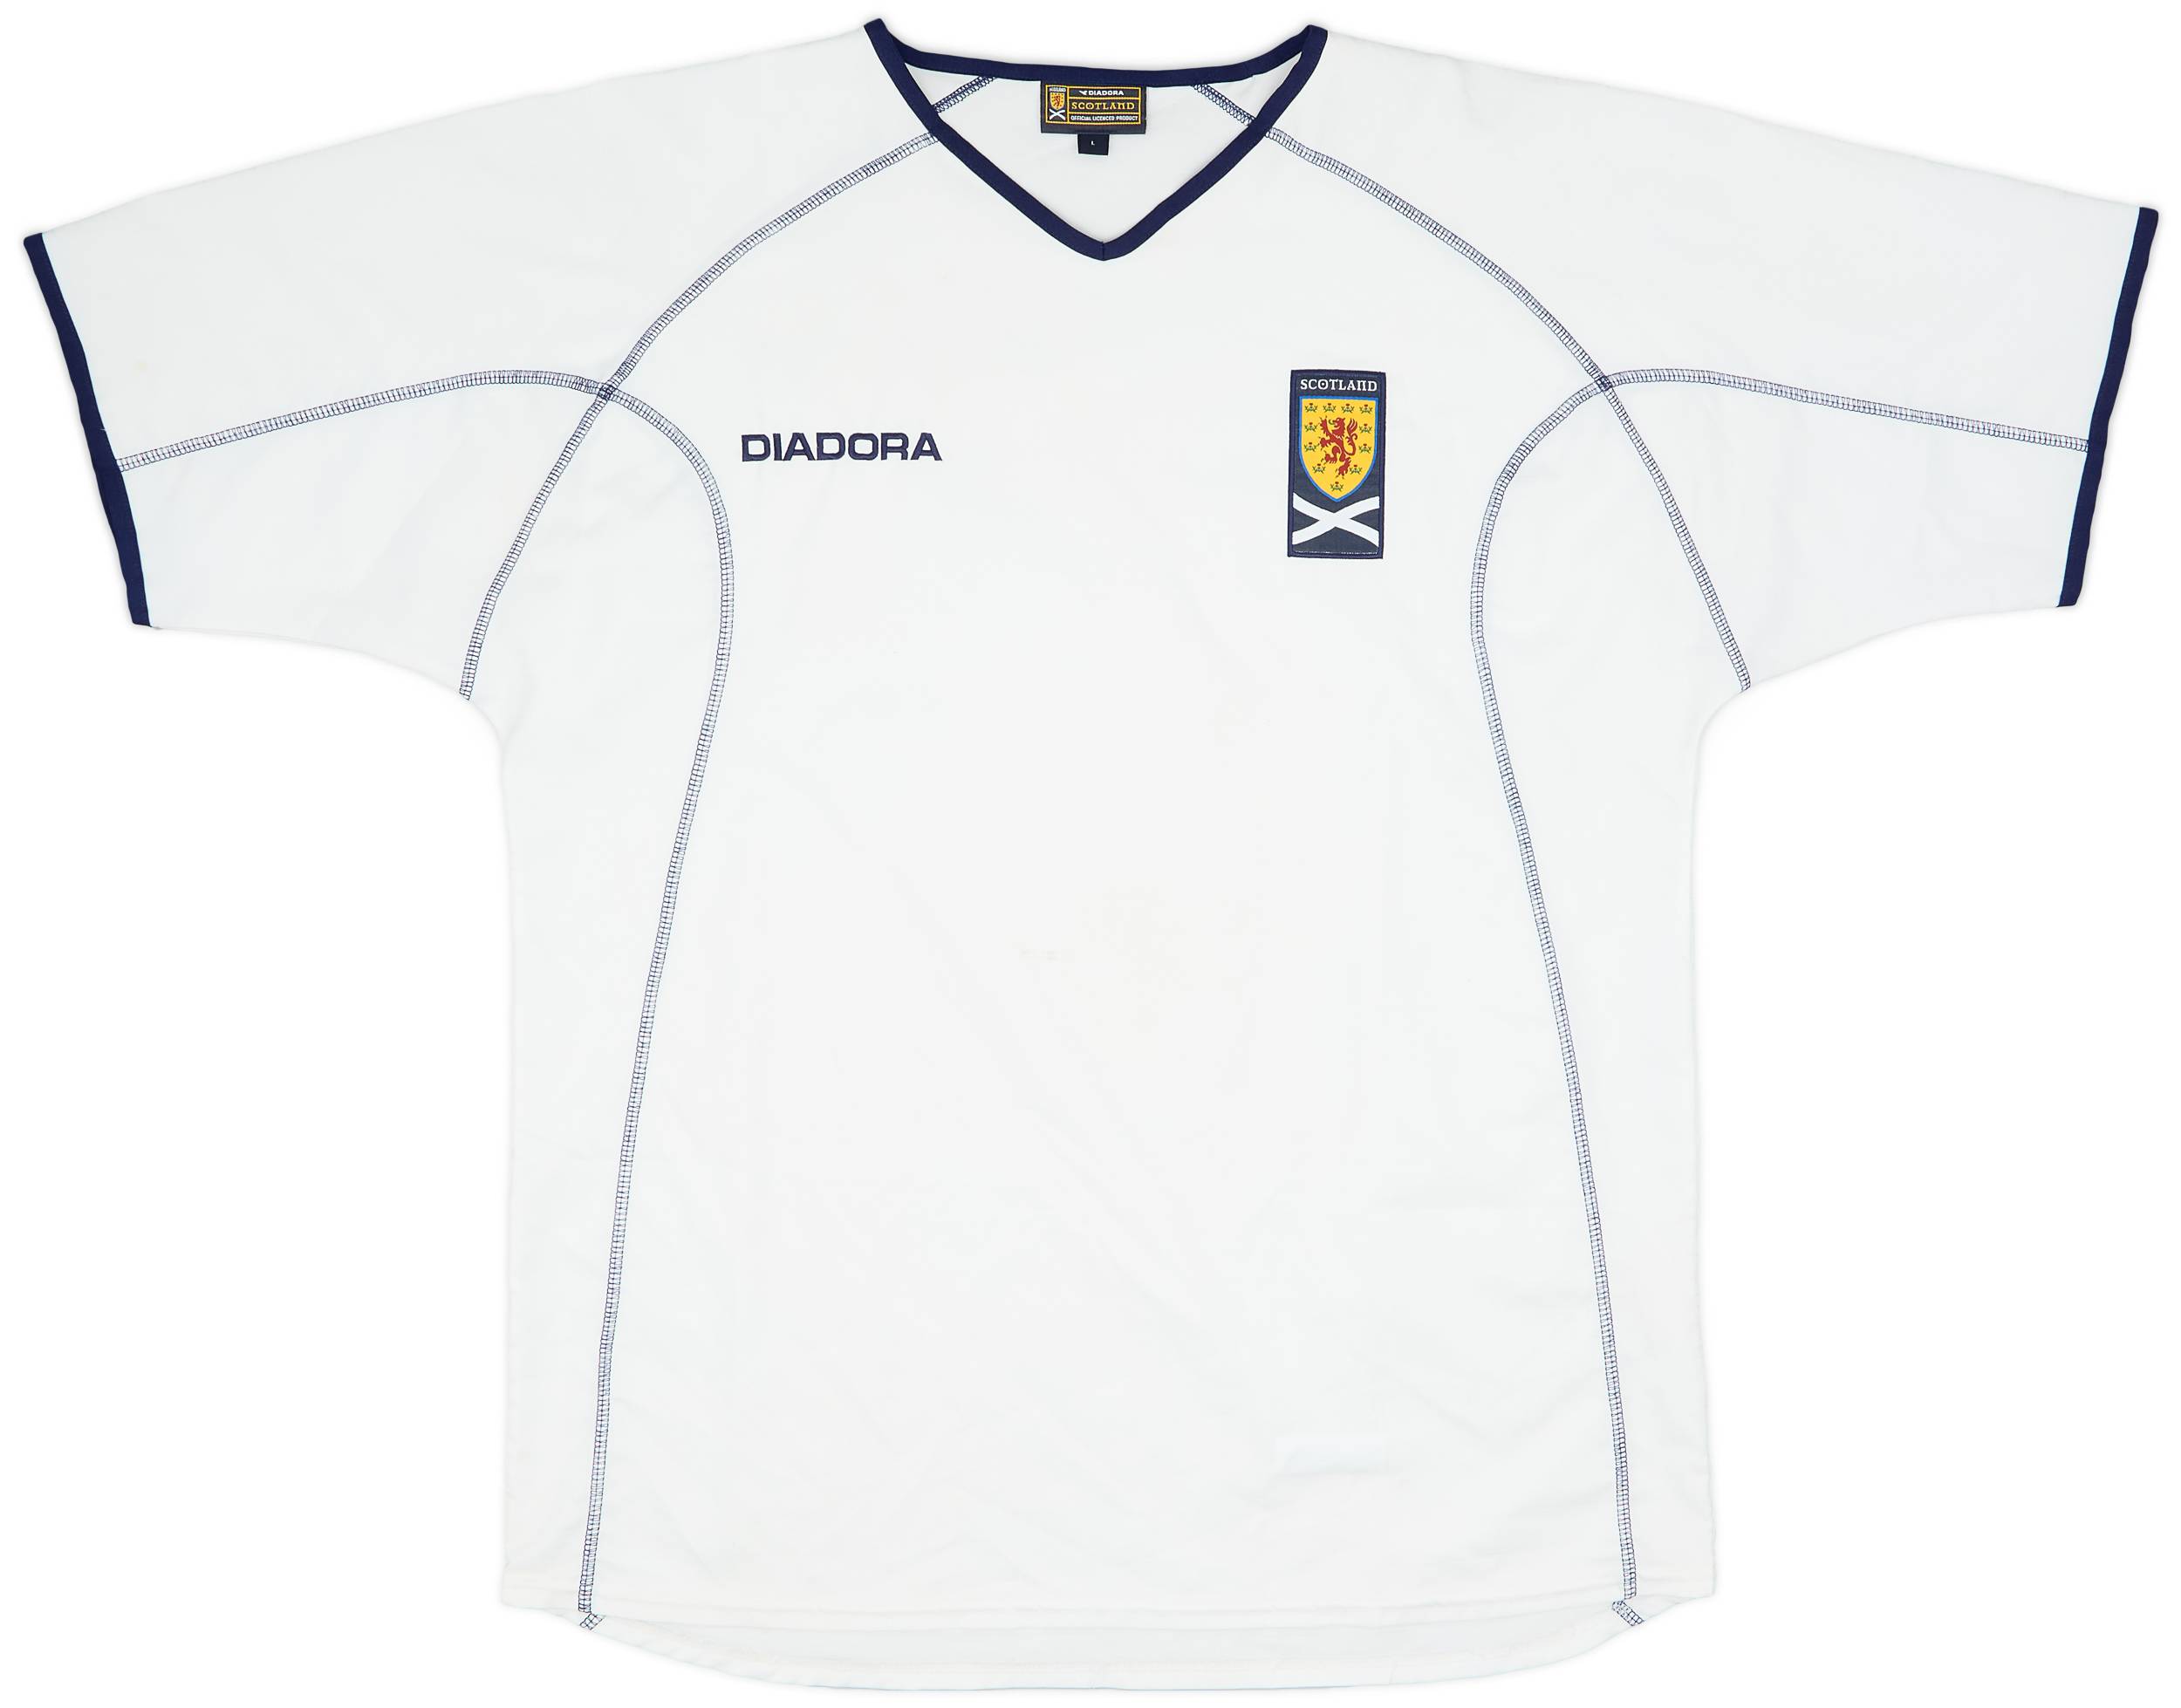 2003-05 Scotland Away Shirt - 9/10 - (L)